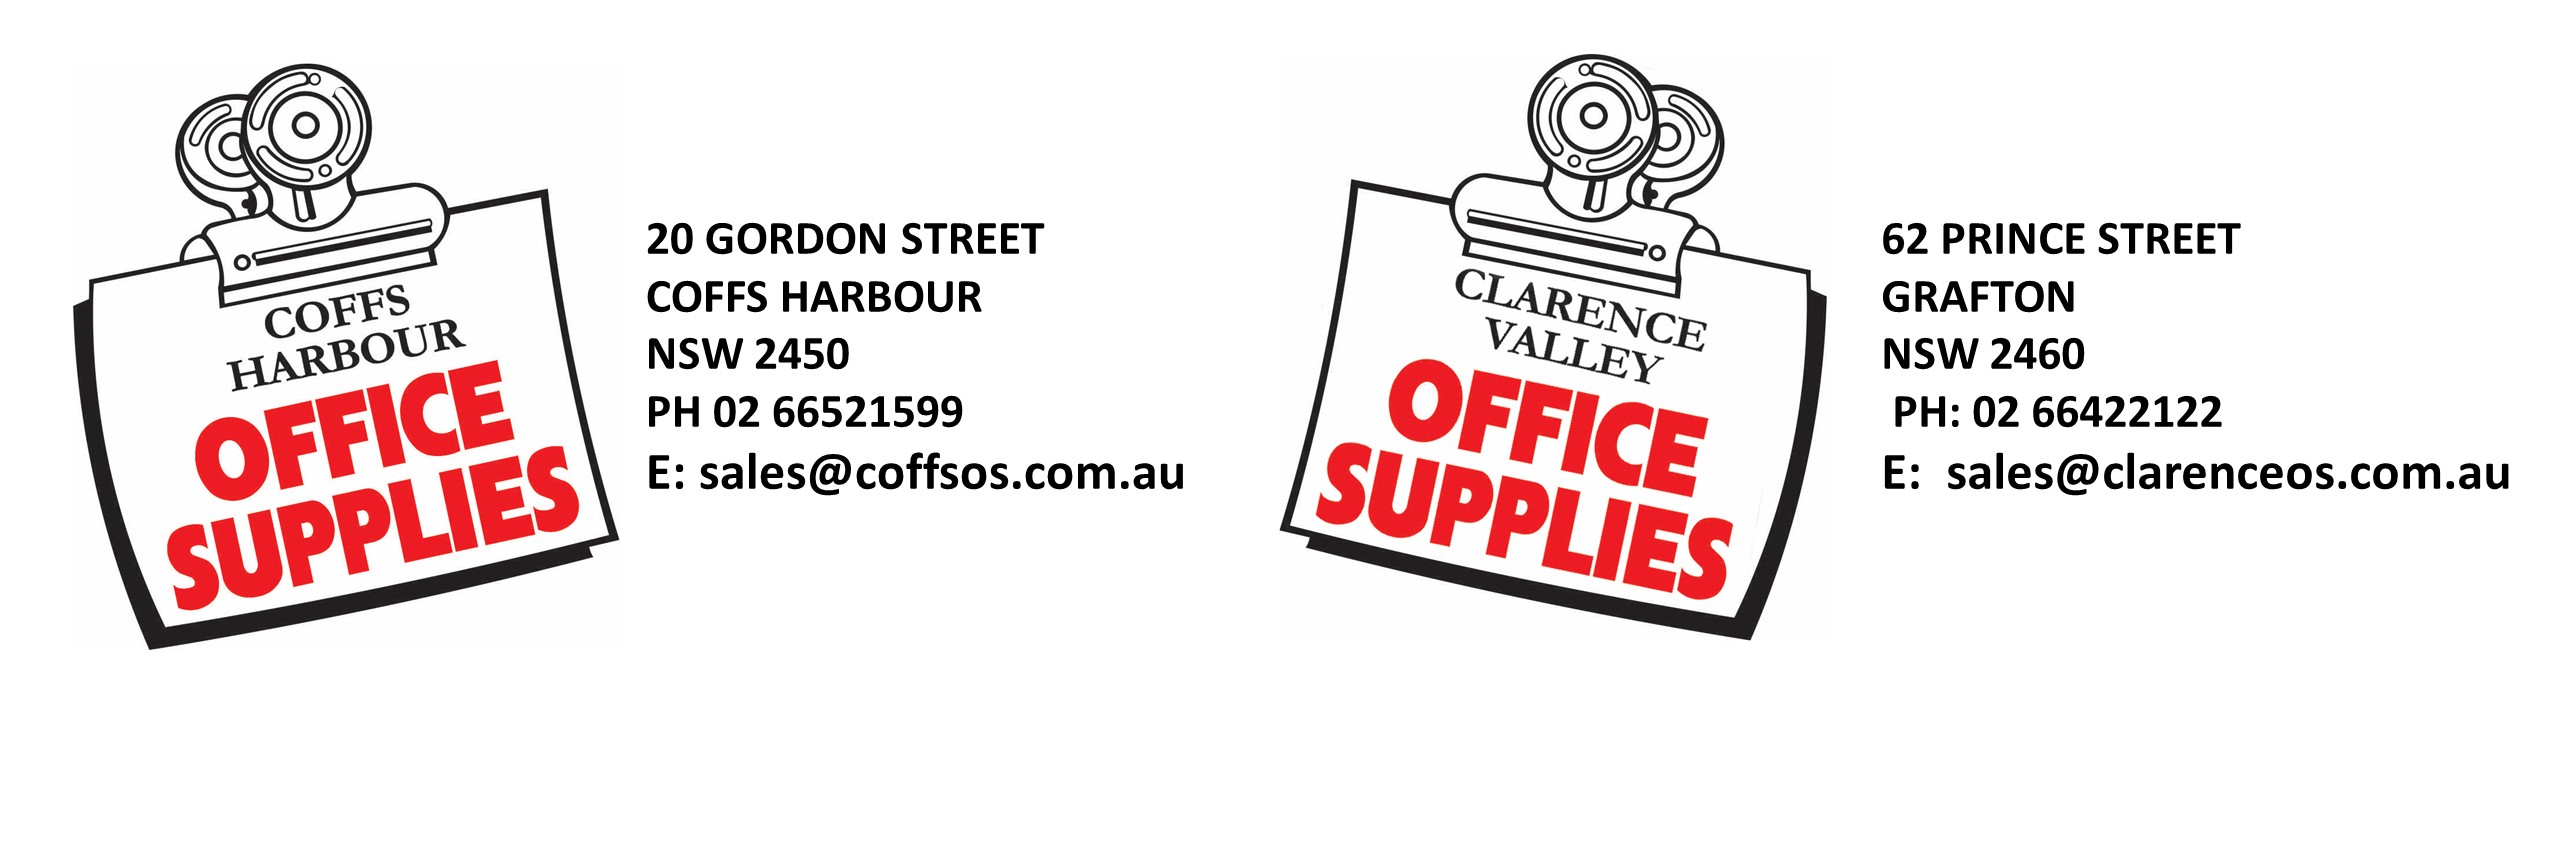 Coffs Harbour Office Supplies